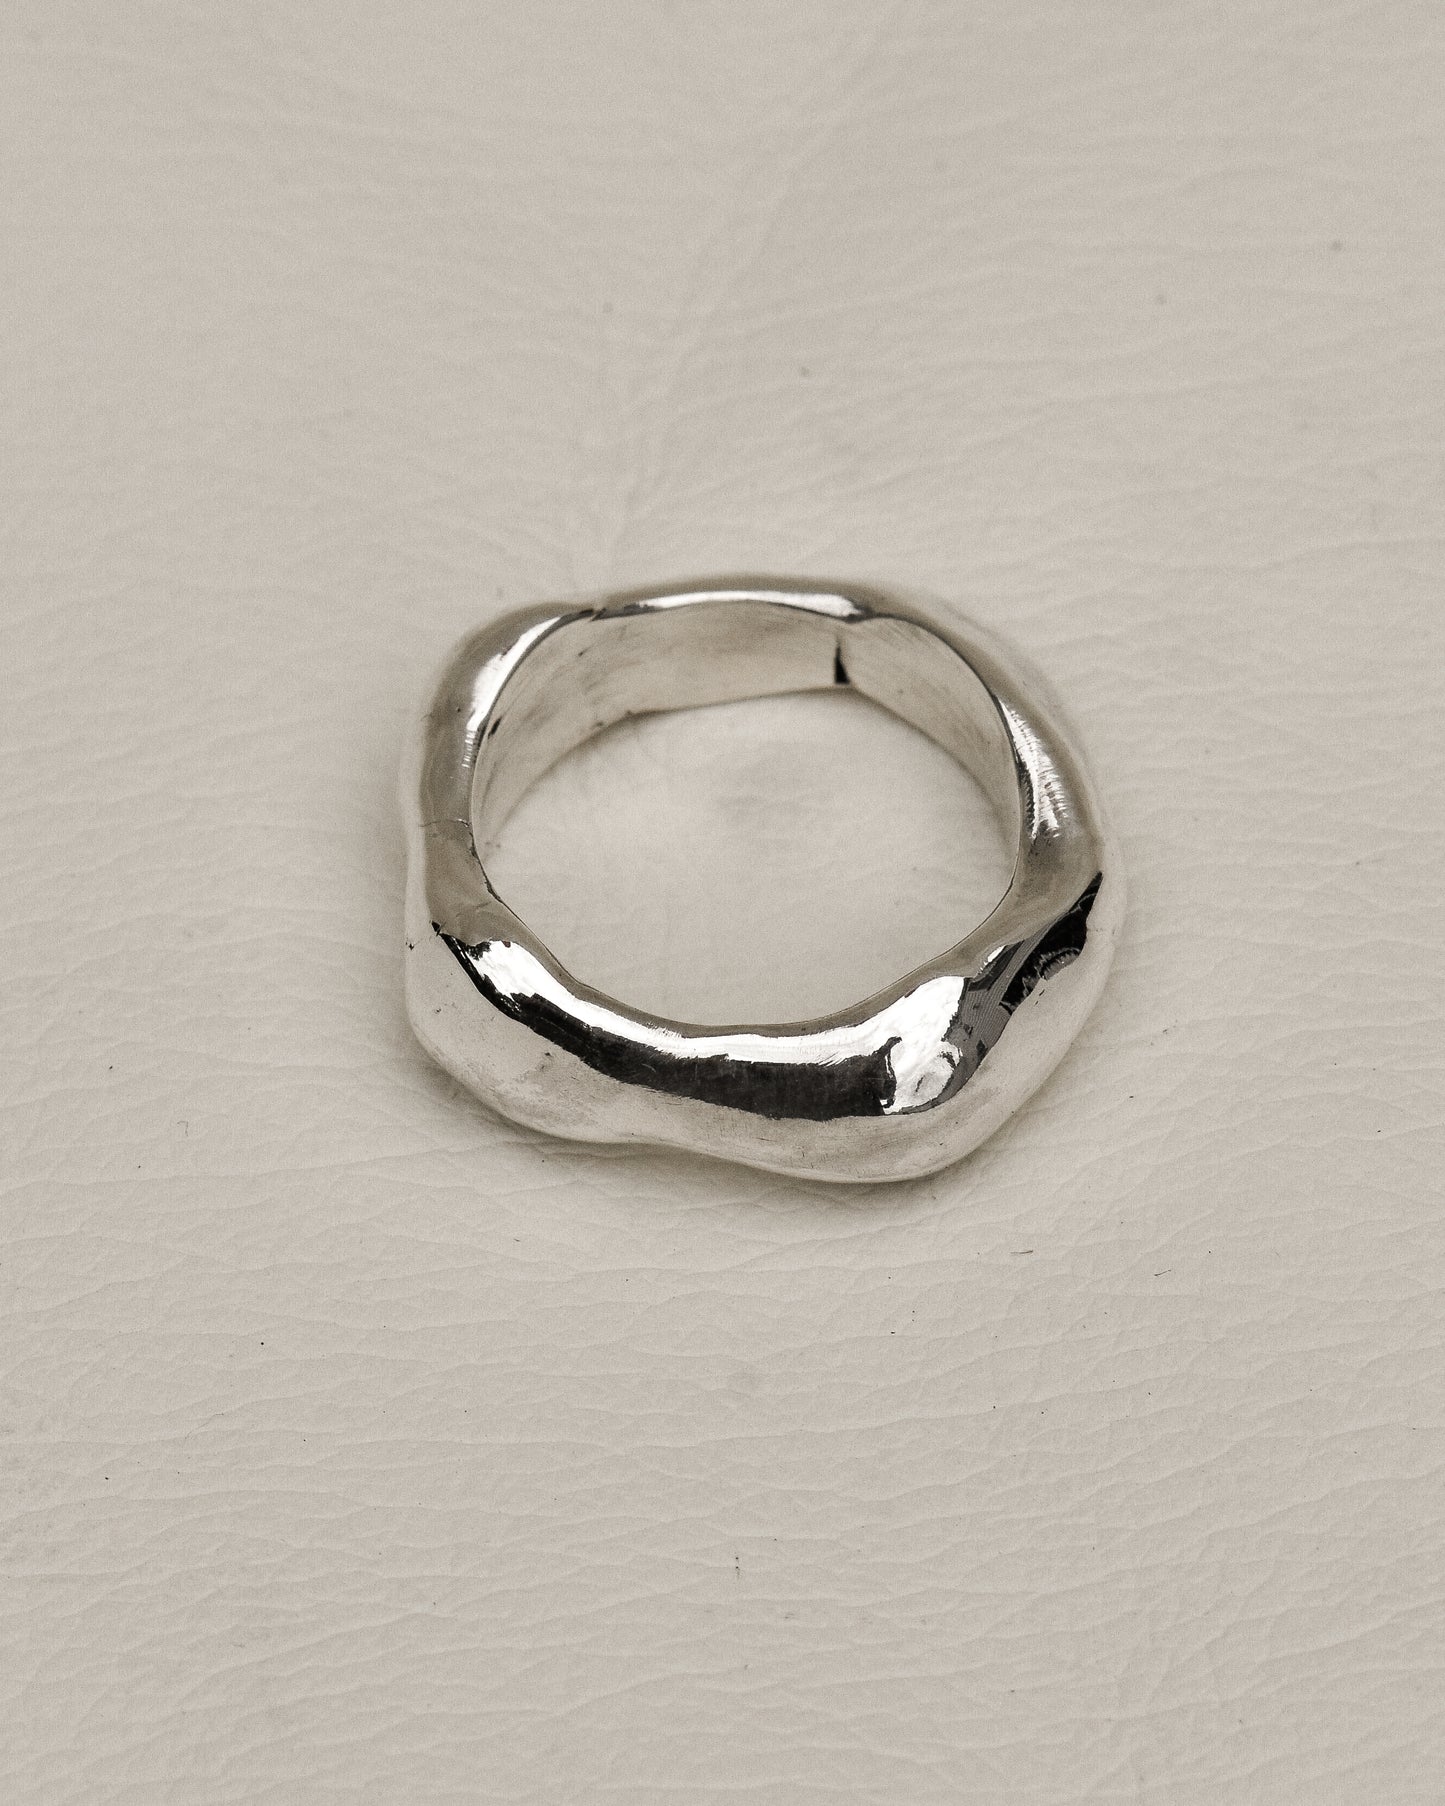 The Morph Ring